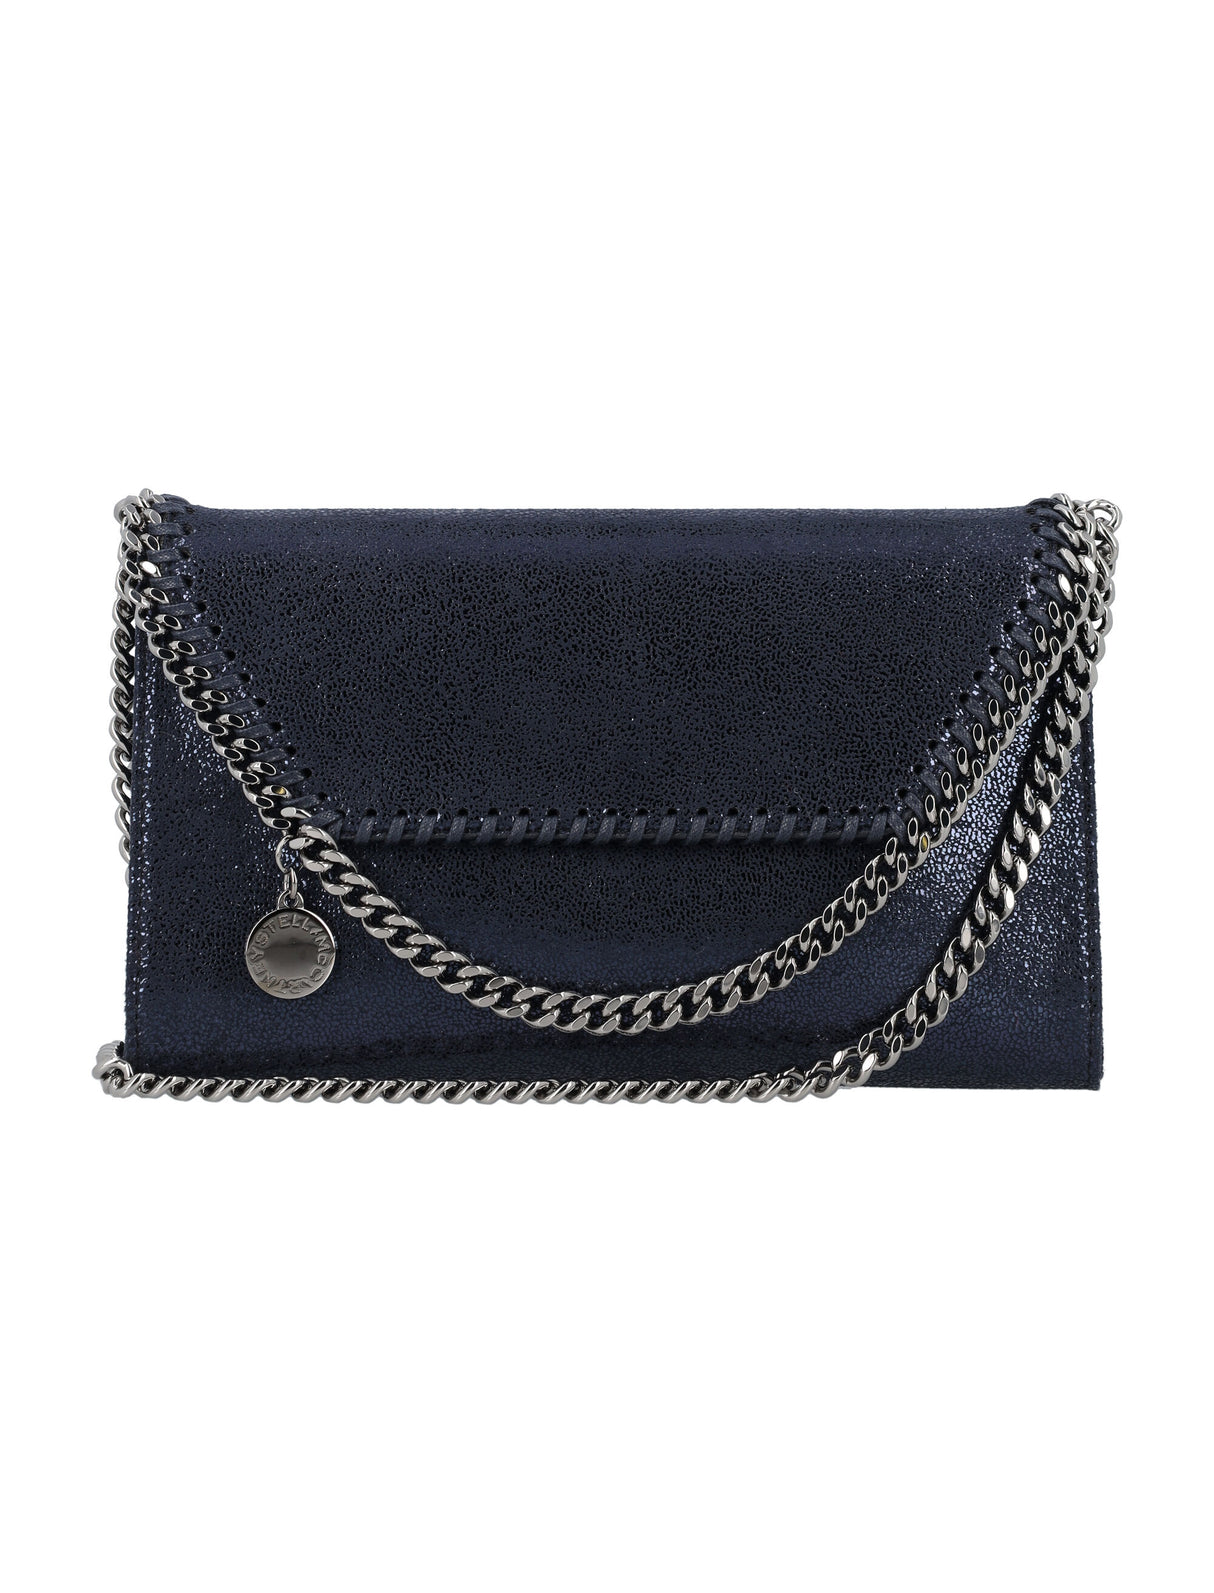 STELLA MCCARTNEY Mini Falabella Flap Shiny Handbag with Brass Chain Strap - Black, 14x23x3 cm